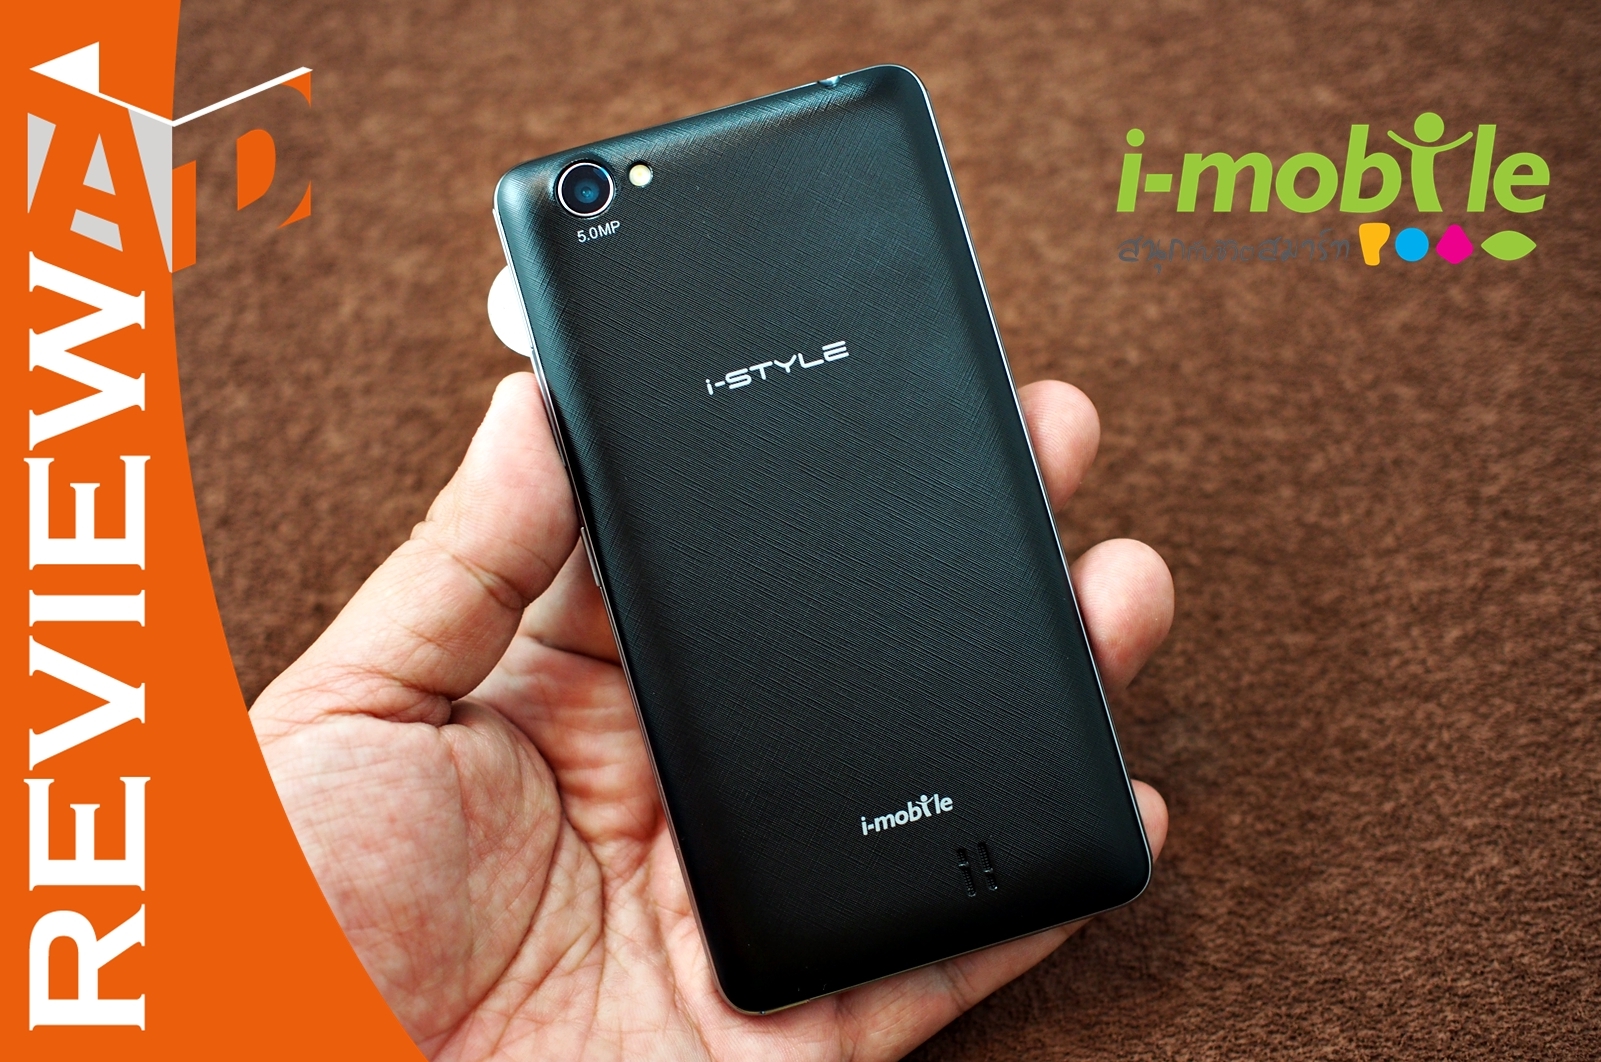 review i Mobile i Style 712 | i-Mobile i-Style 712 | รีวิว i-Mobile i-Style 712 สมาร์ทโฟนชั้นประหยัดราคาเบาๆ กับสเปคระดับเริ่มต้น บน Android 6.0